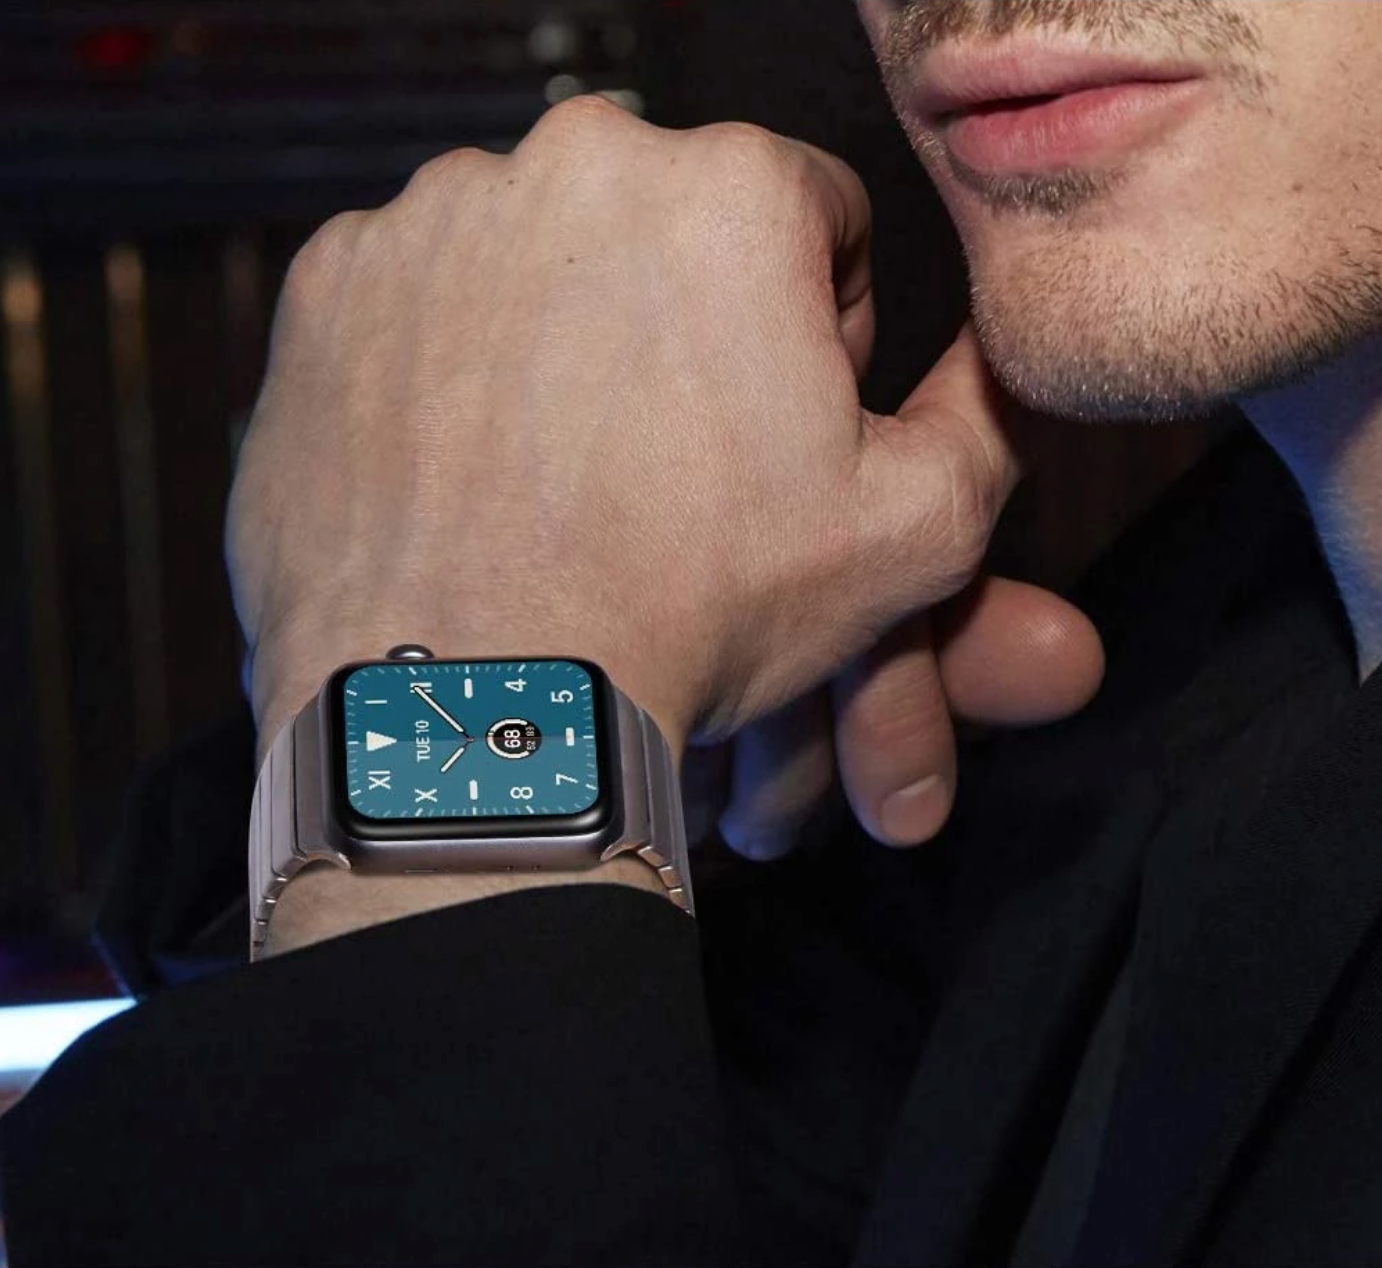 Apple Watch Stahlgliederarmband – Silber